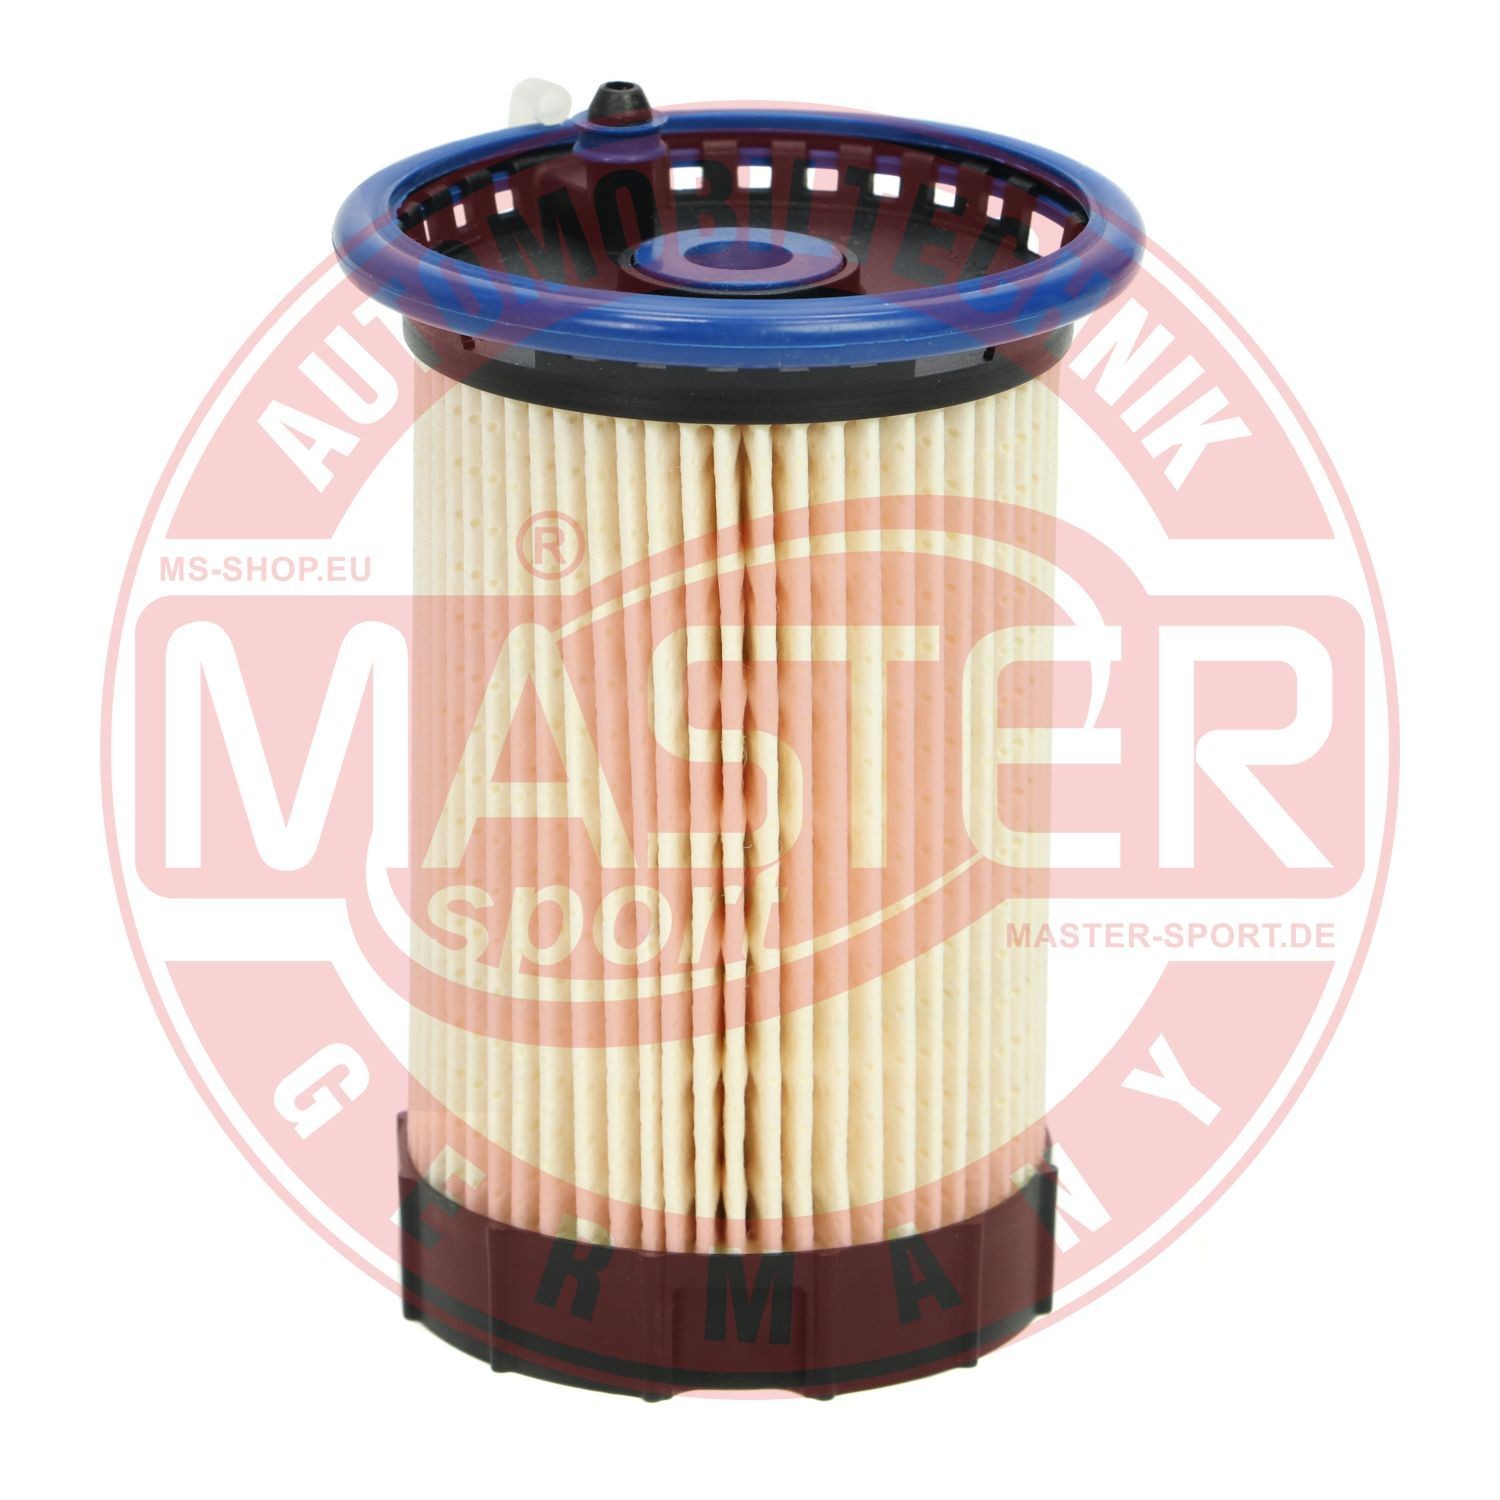 Skoda SCALA Fuel filter MASTER-SPORT 8014-KF-PCS-MS cheap